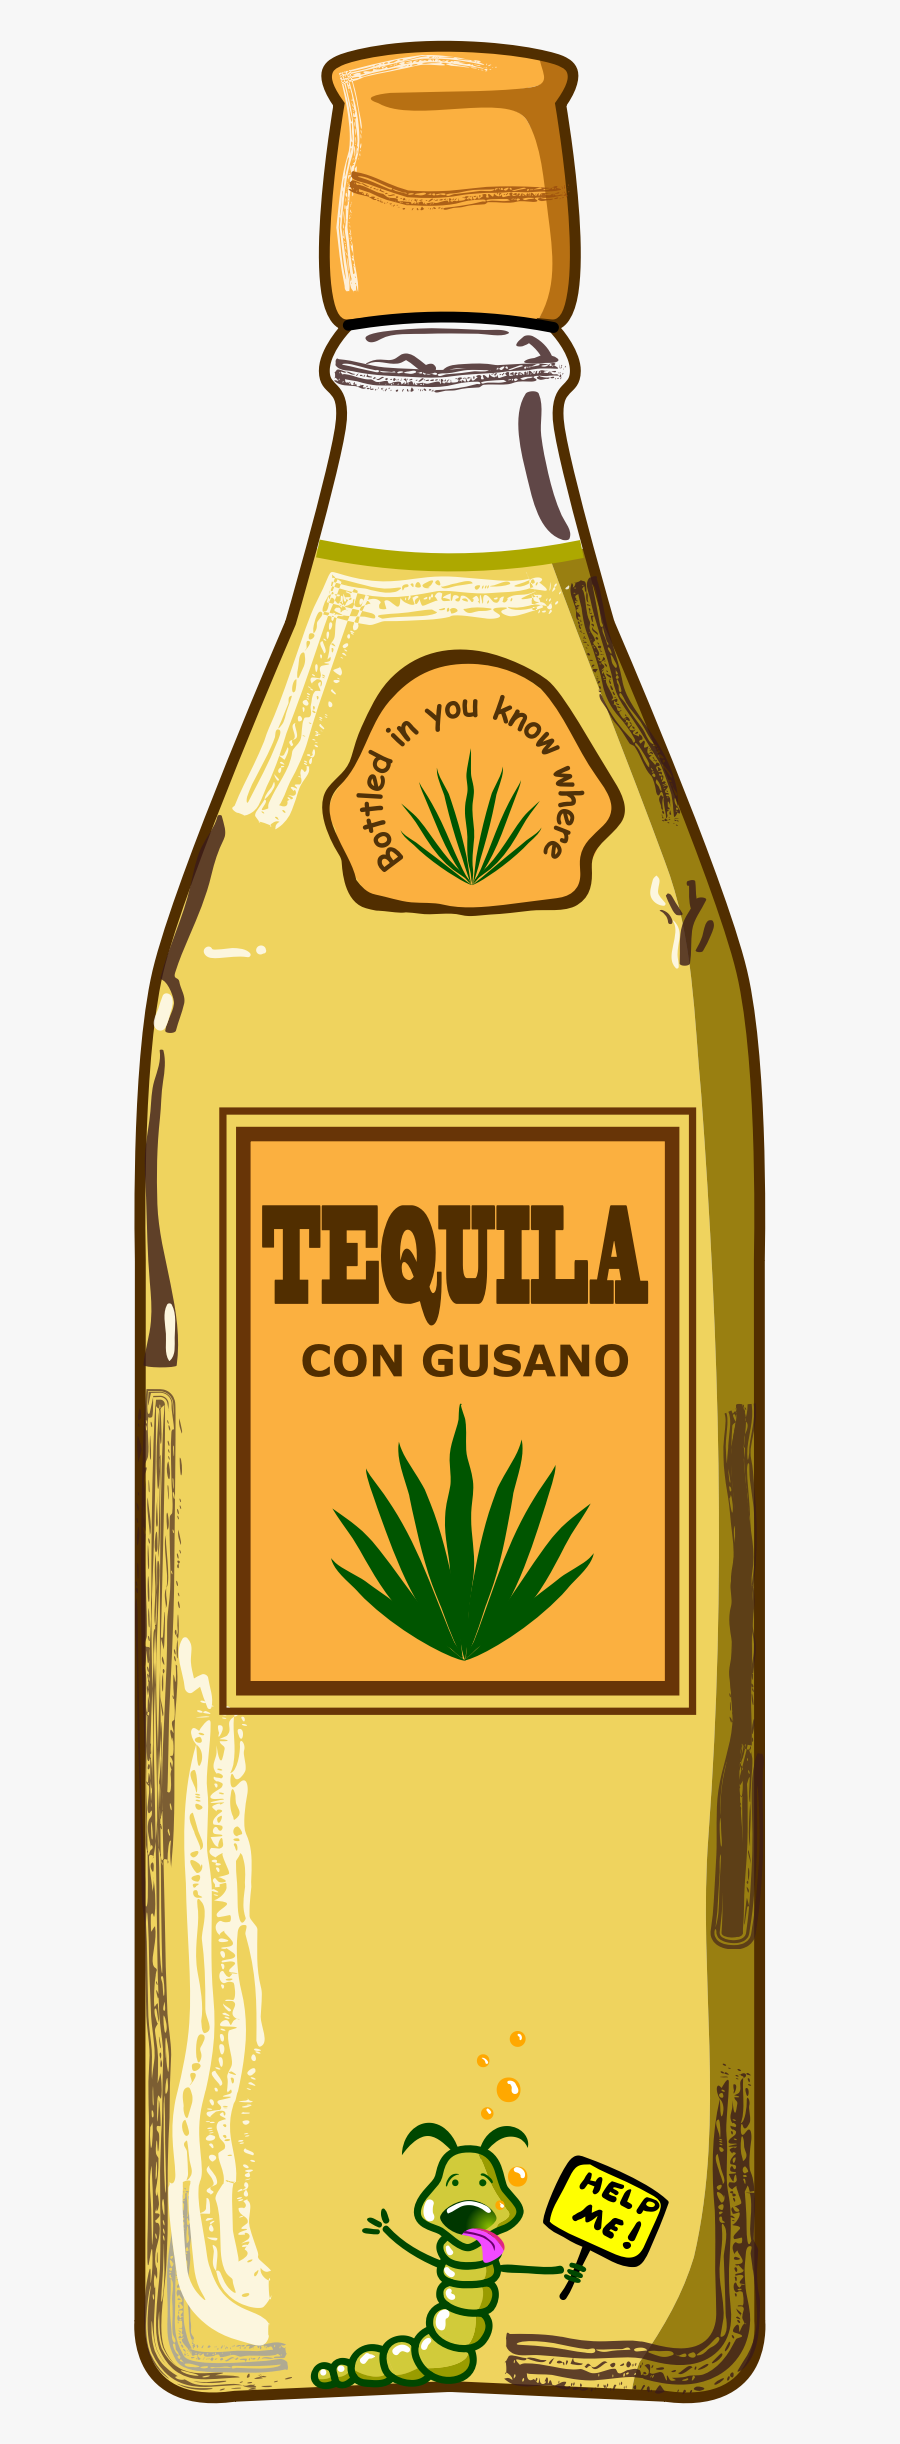 Clipart Tequila, Transparent Clipart